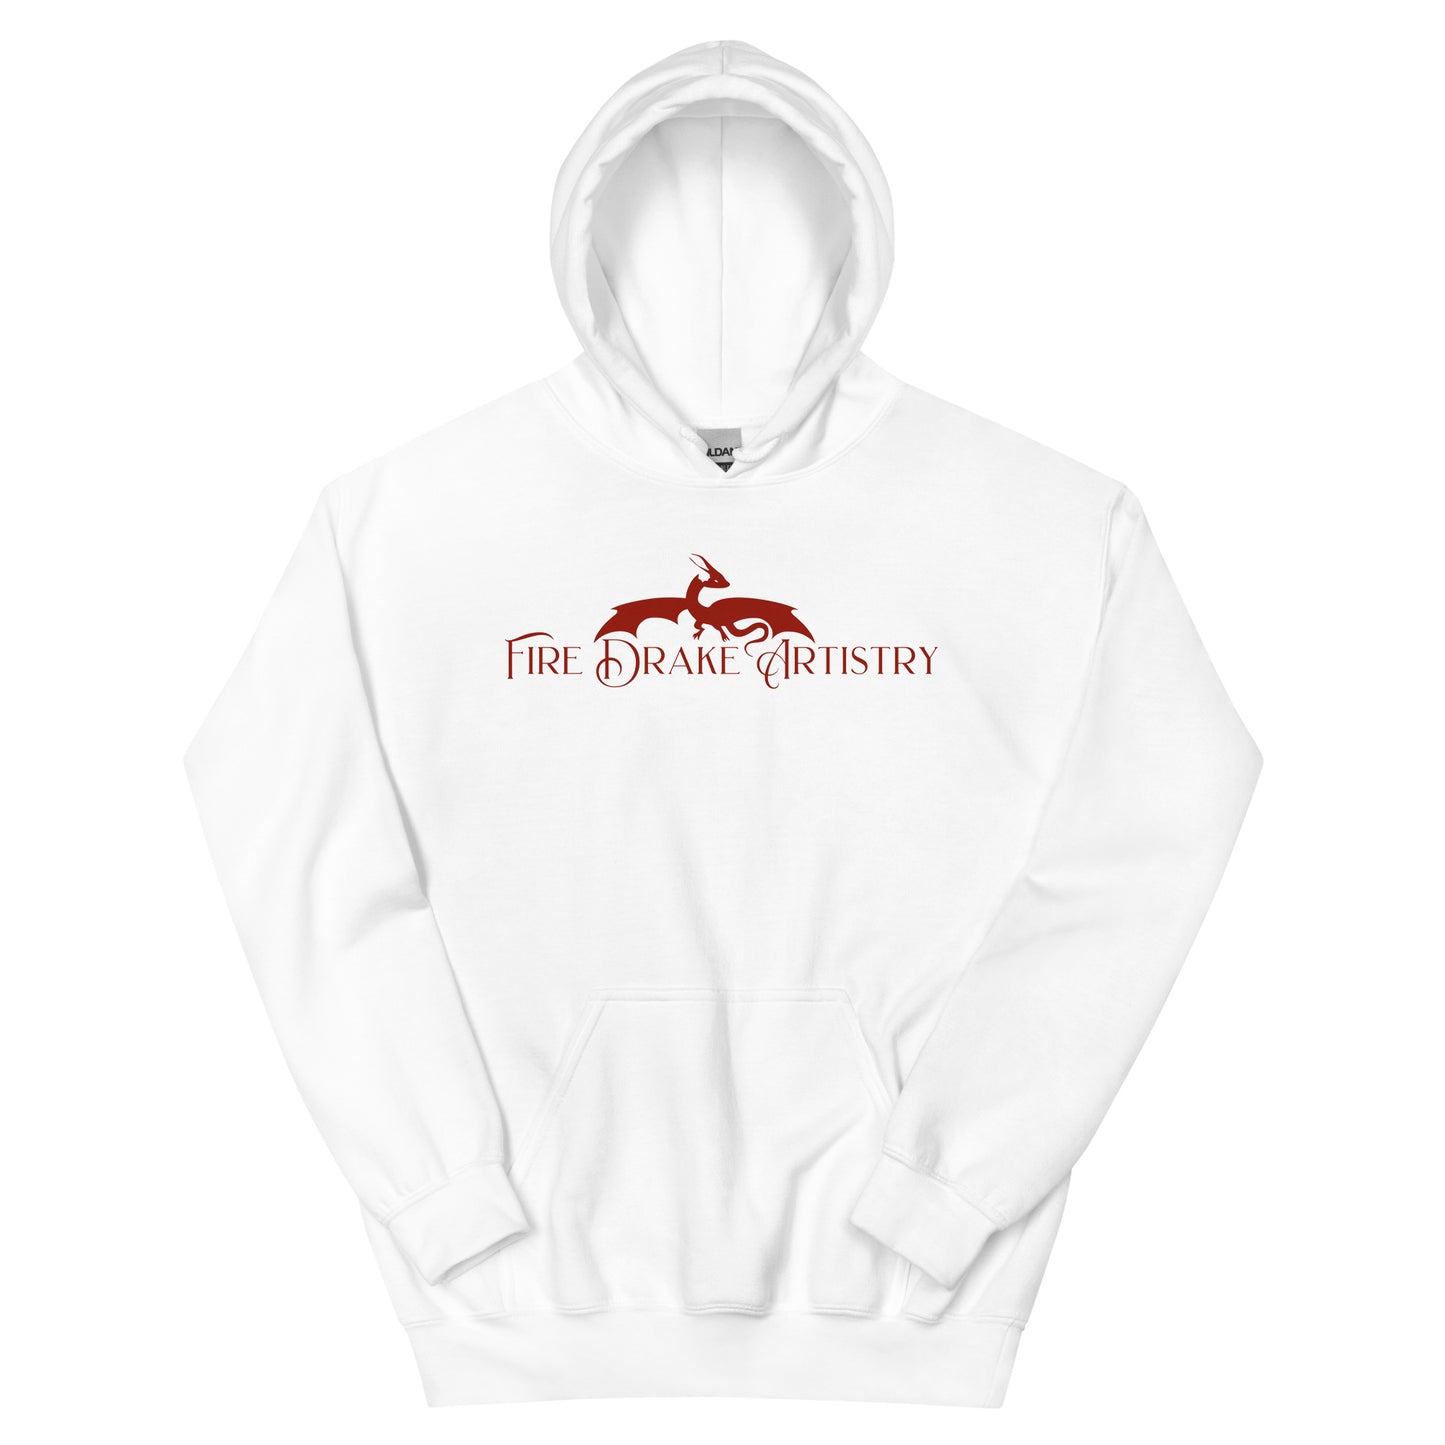 First Drake Artistry Logo Unisex Hoodie Sweatshirt Merch™ for FireDrake Artistry